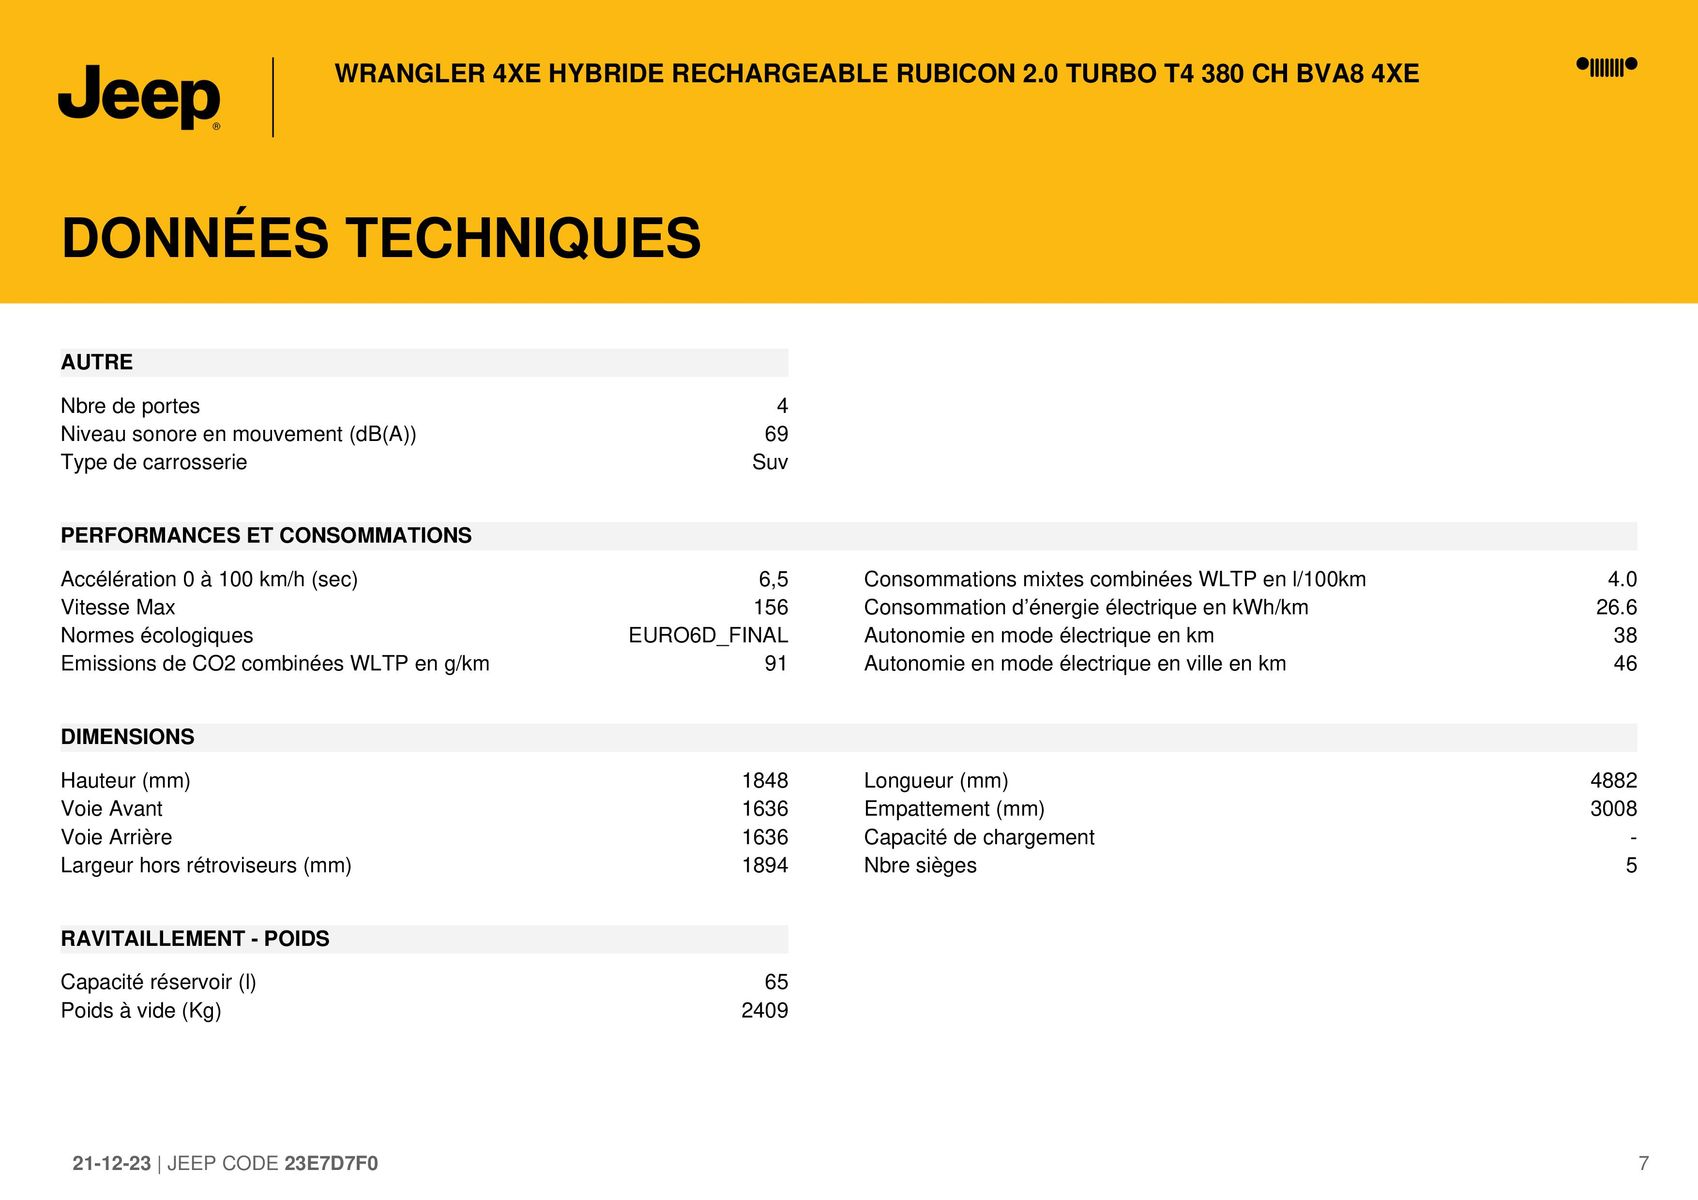 Catalogue WRANGLER 4XE HYBRIDE RECHARGEABLE RUBICON 2.0 TURBO T4 380 CH BVA8 4XE", page 00007